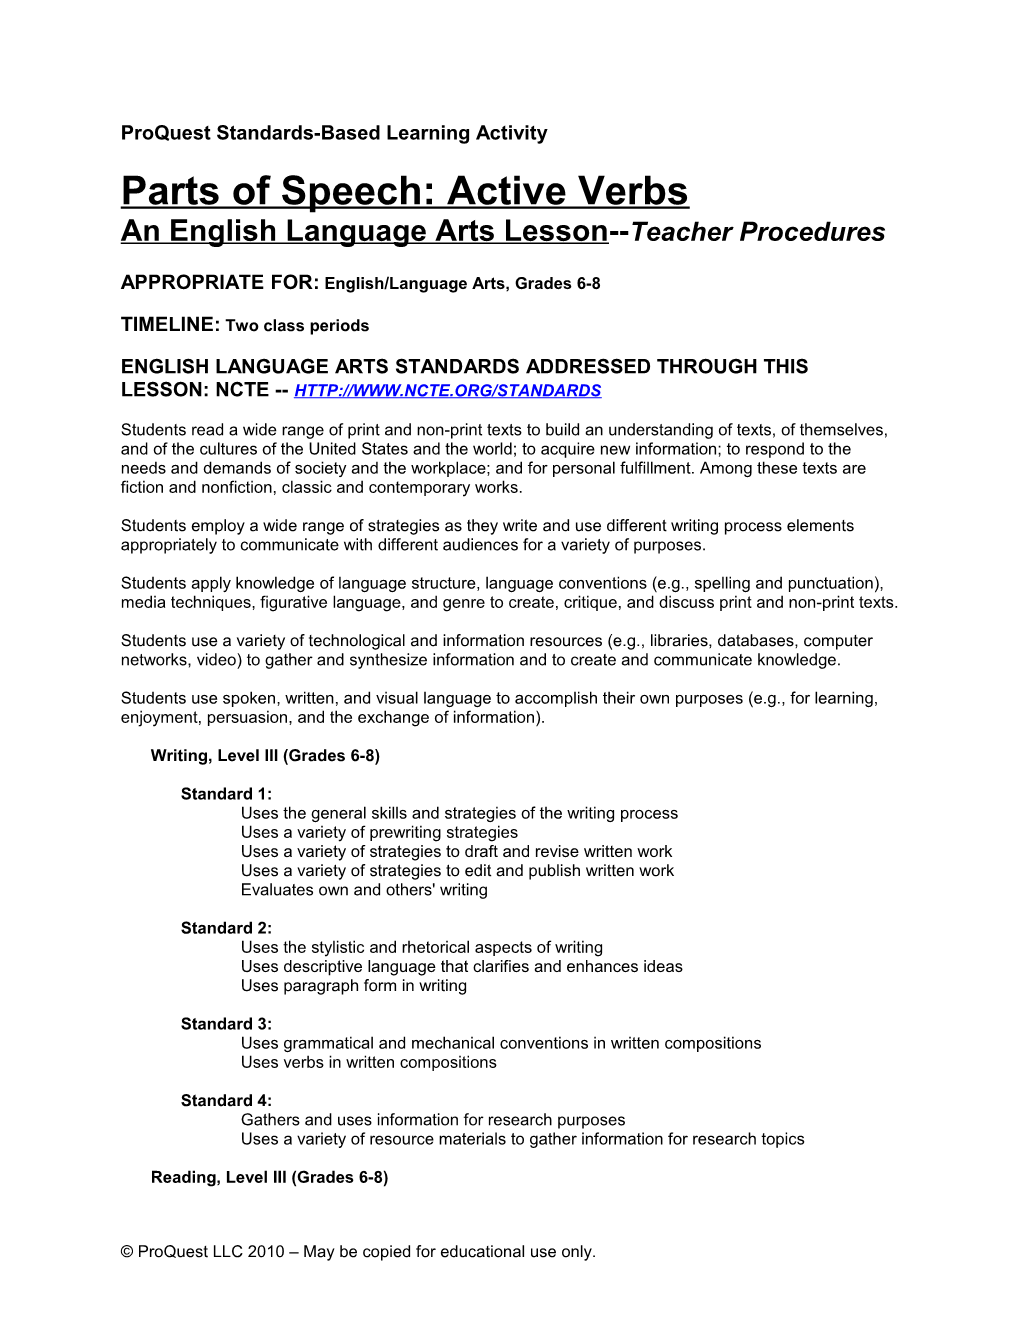 Lesson Plan: Language Arts 6-8 Active Verbs